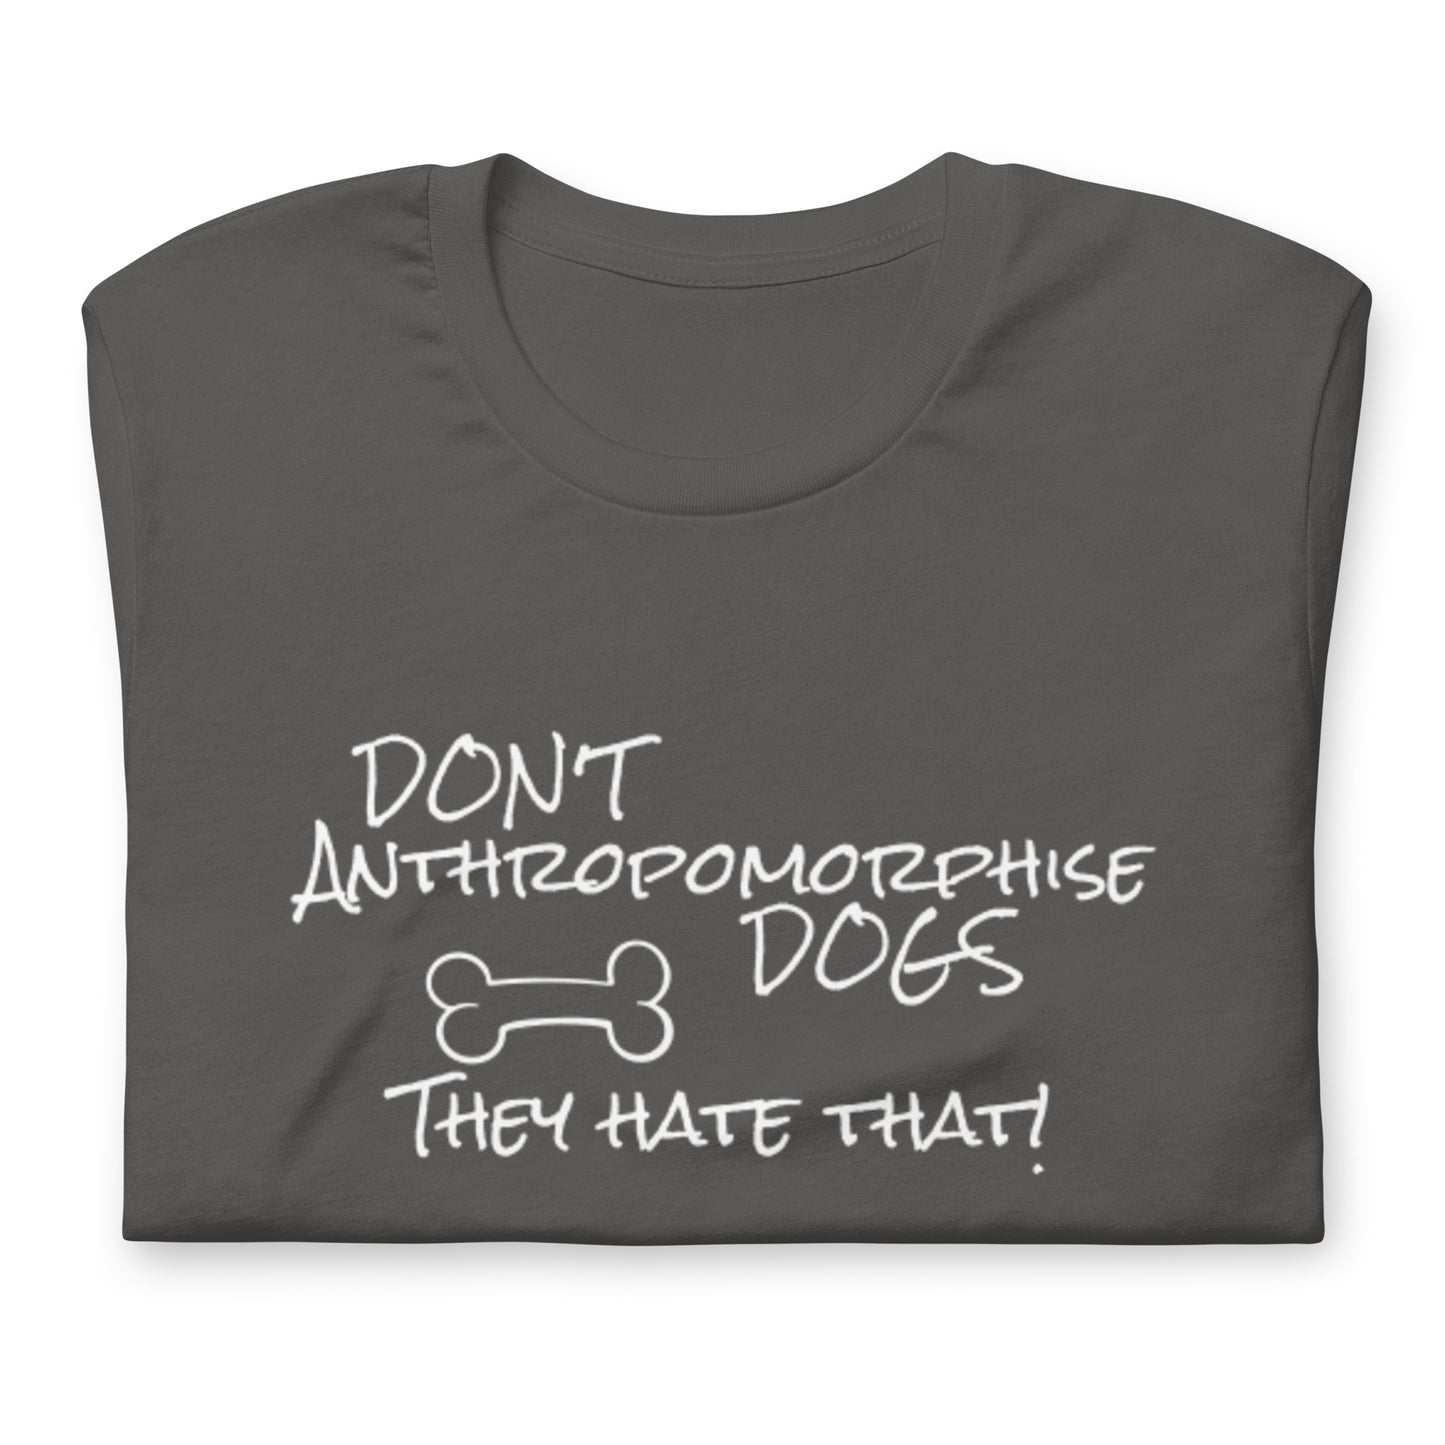 Don't anthropormorphise dogs